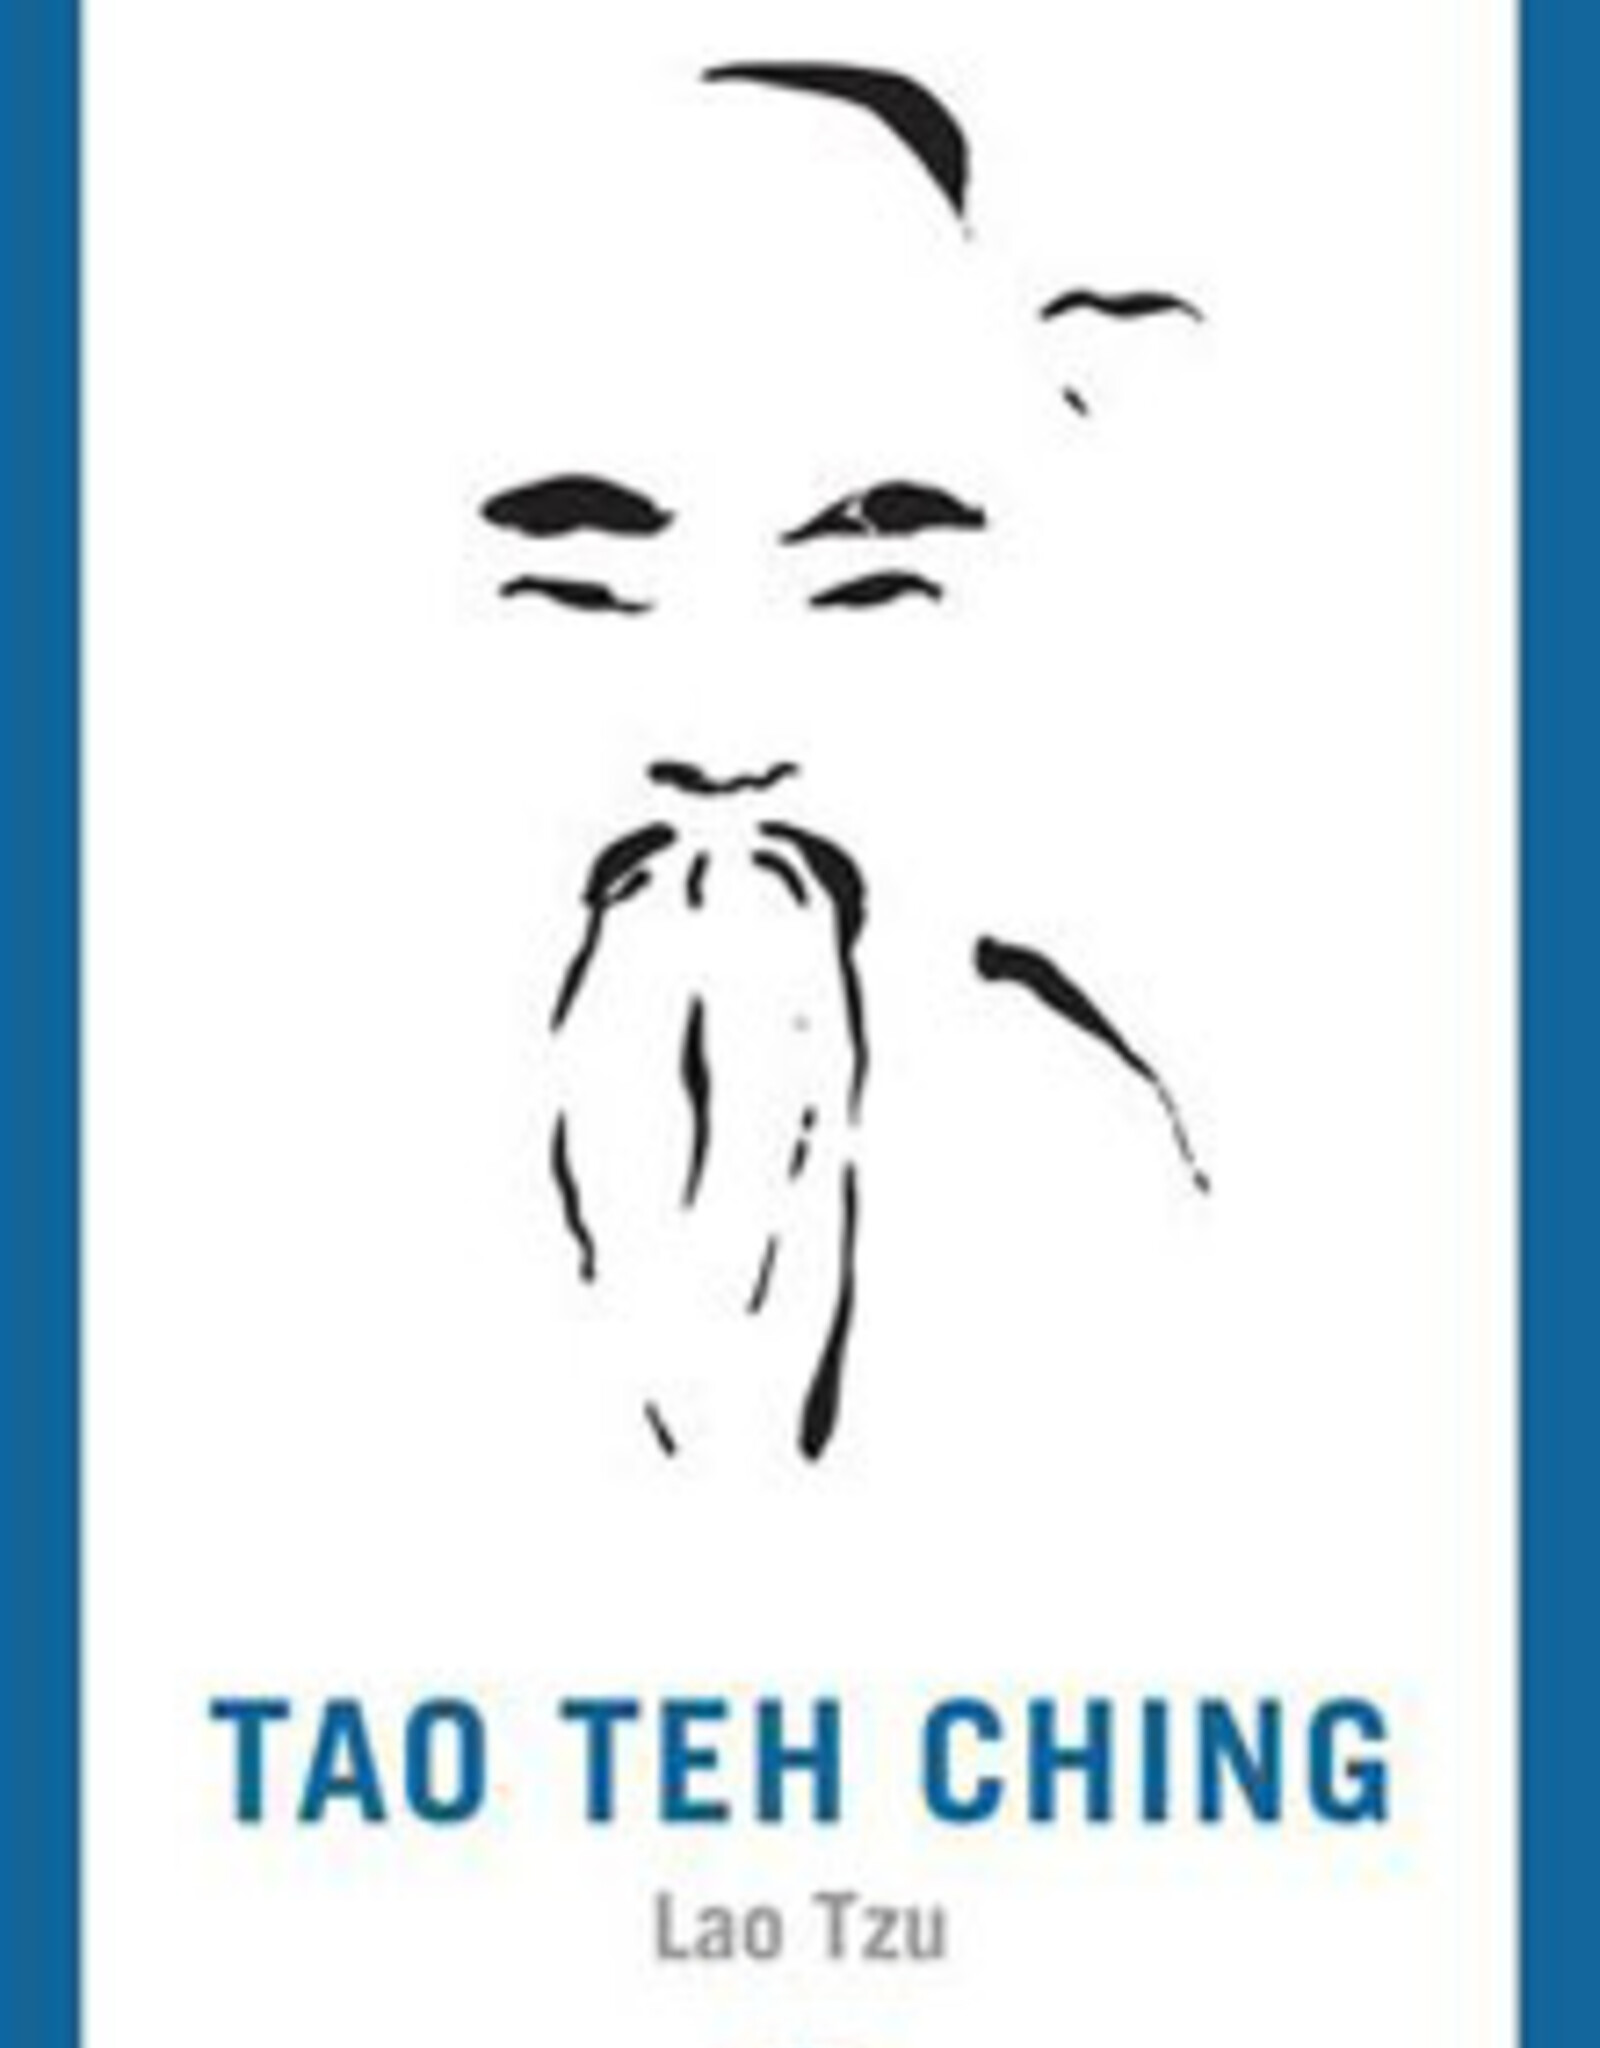 Tao Teh Ching, Pocket Edition Book